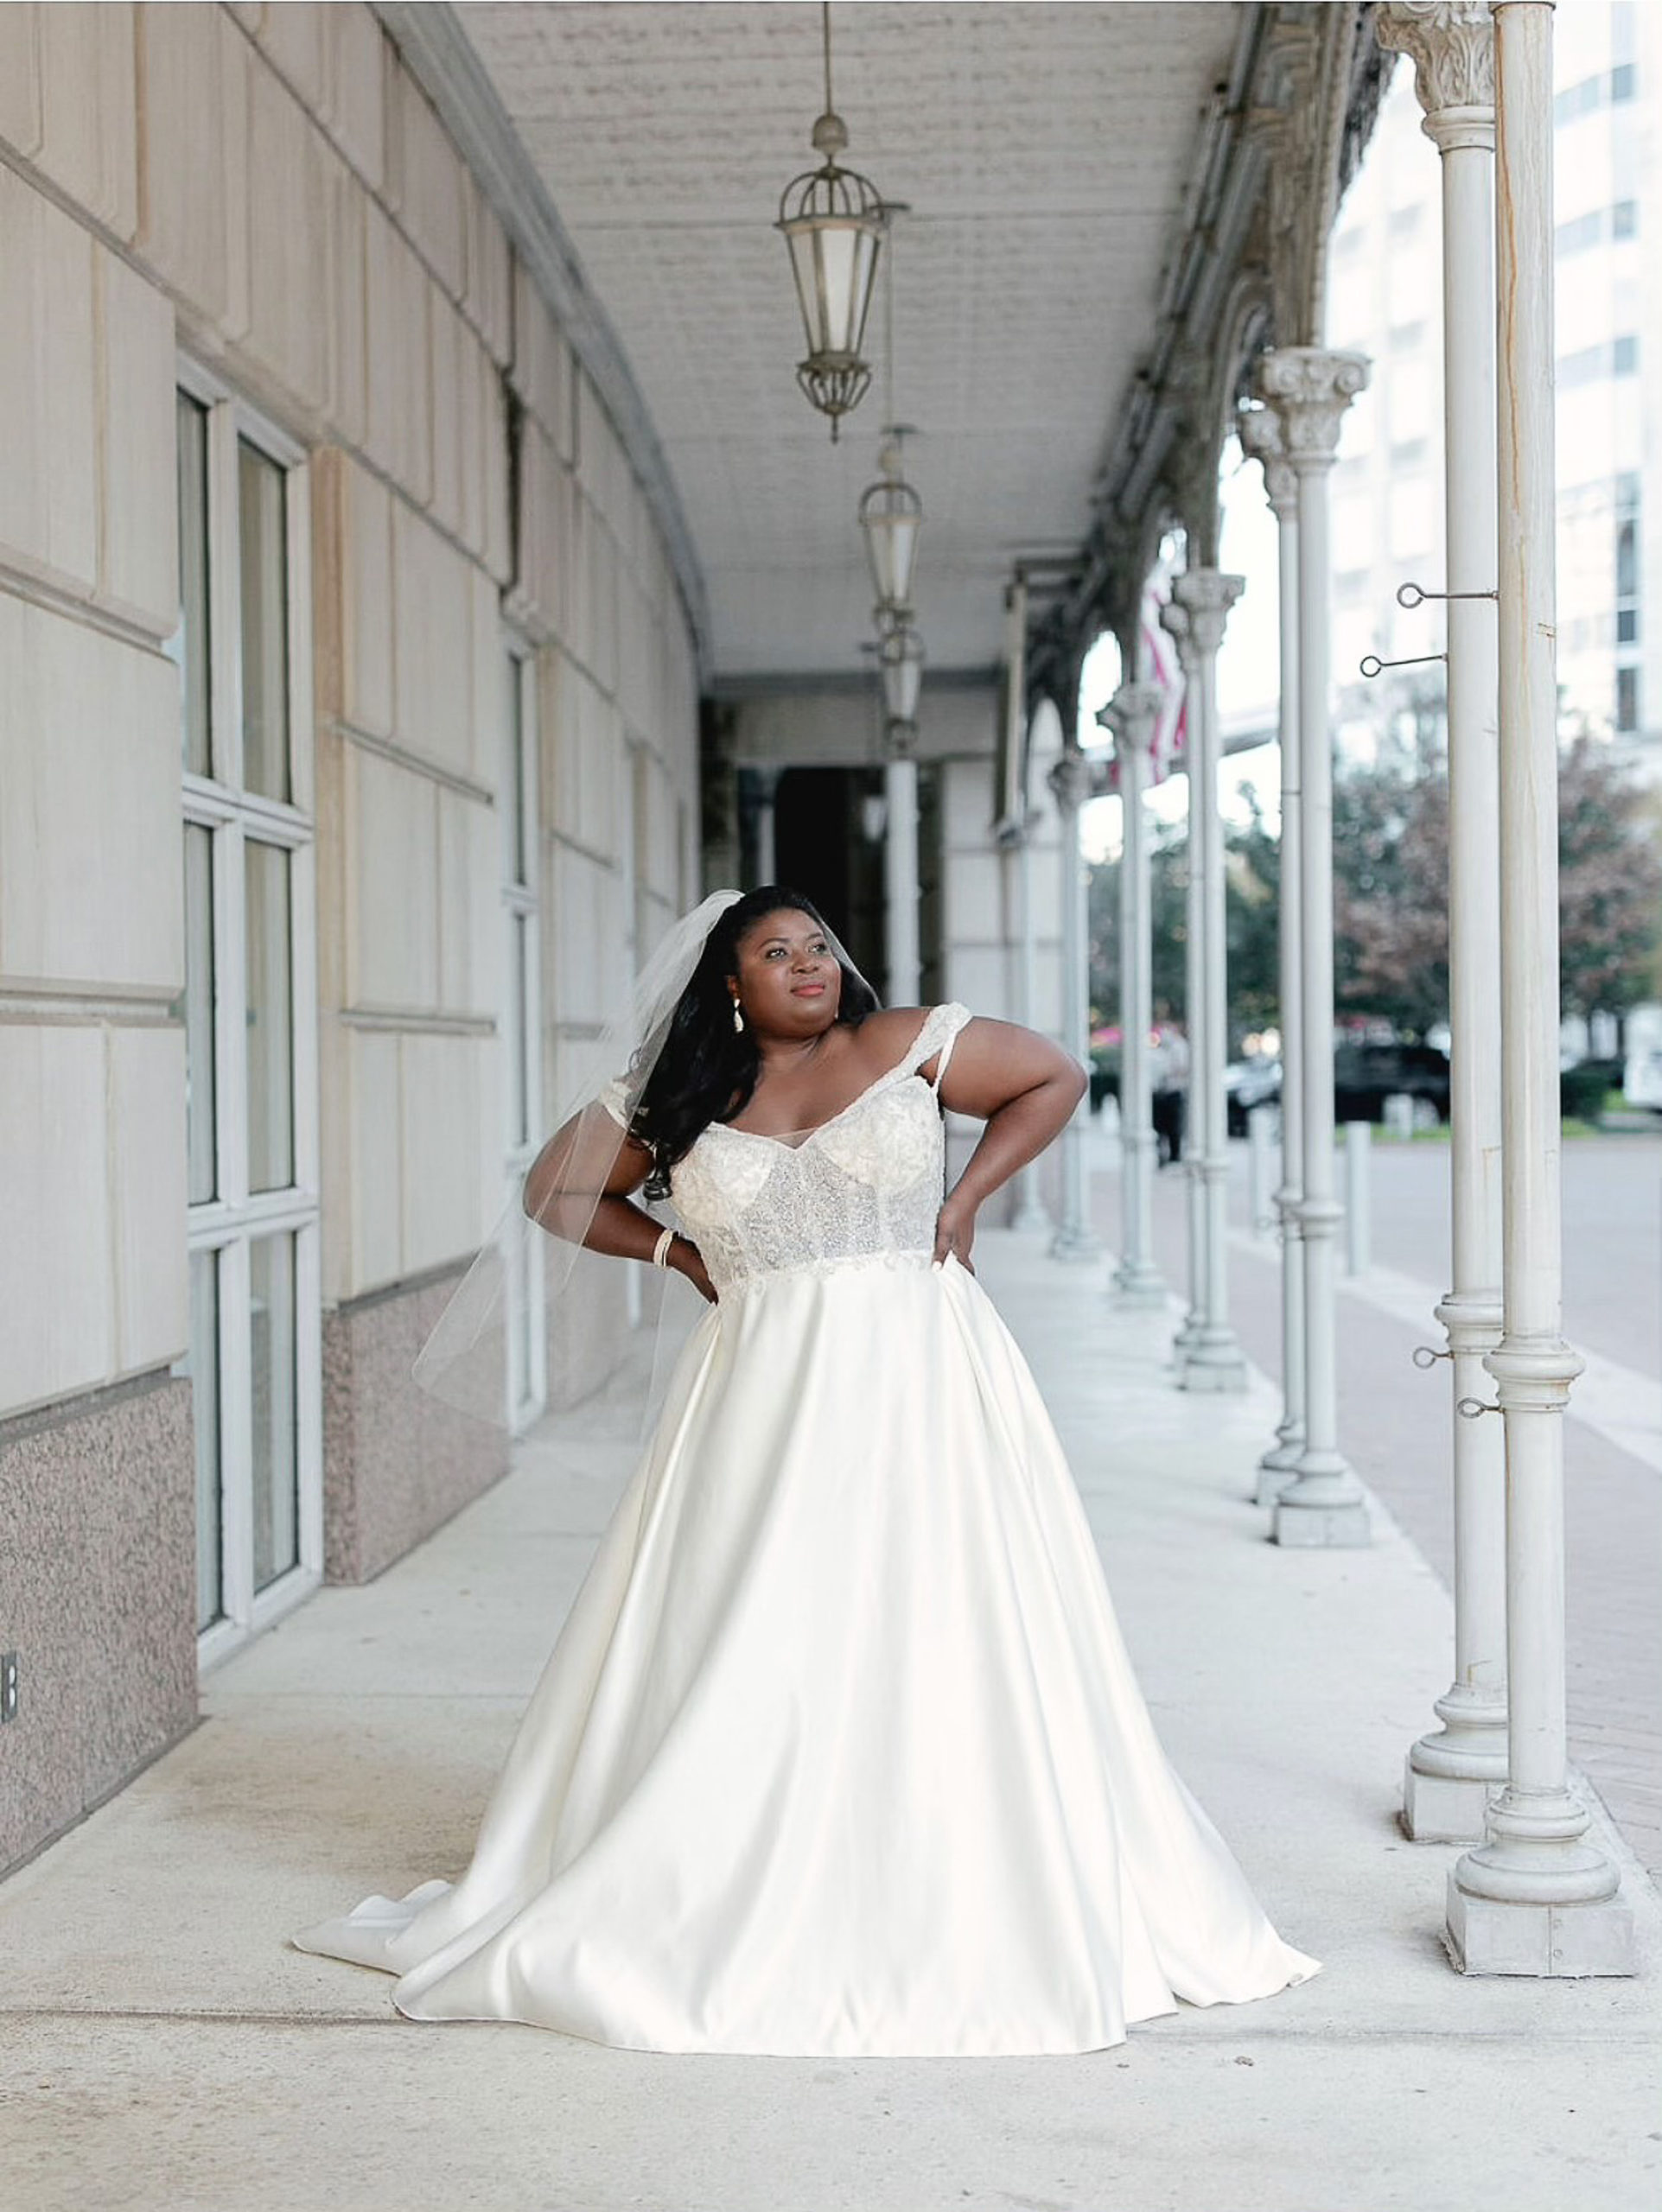 Glamazon Diaries wedding gown - David's Bridal spring 2021 campaign - plus size bride spring 